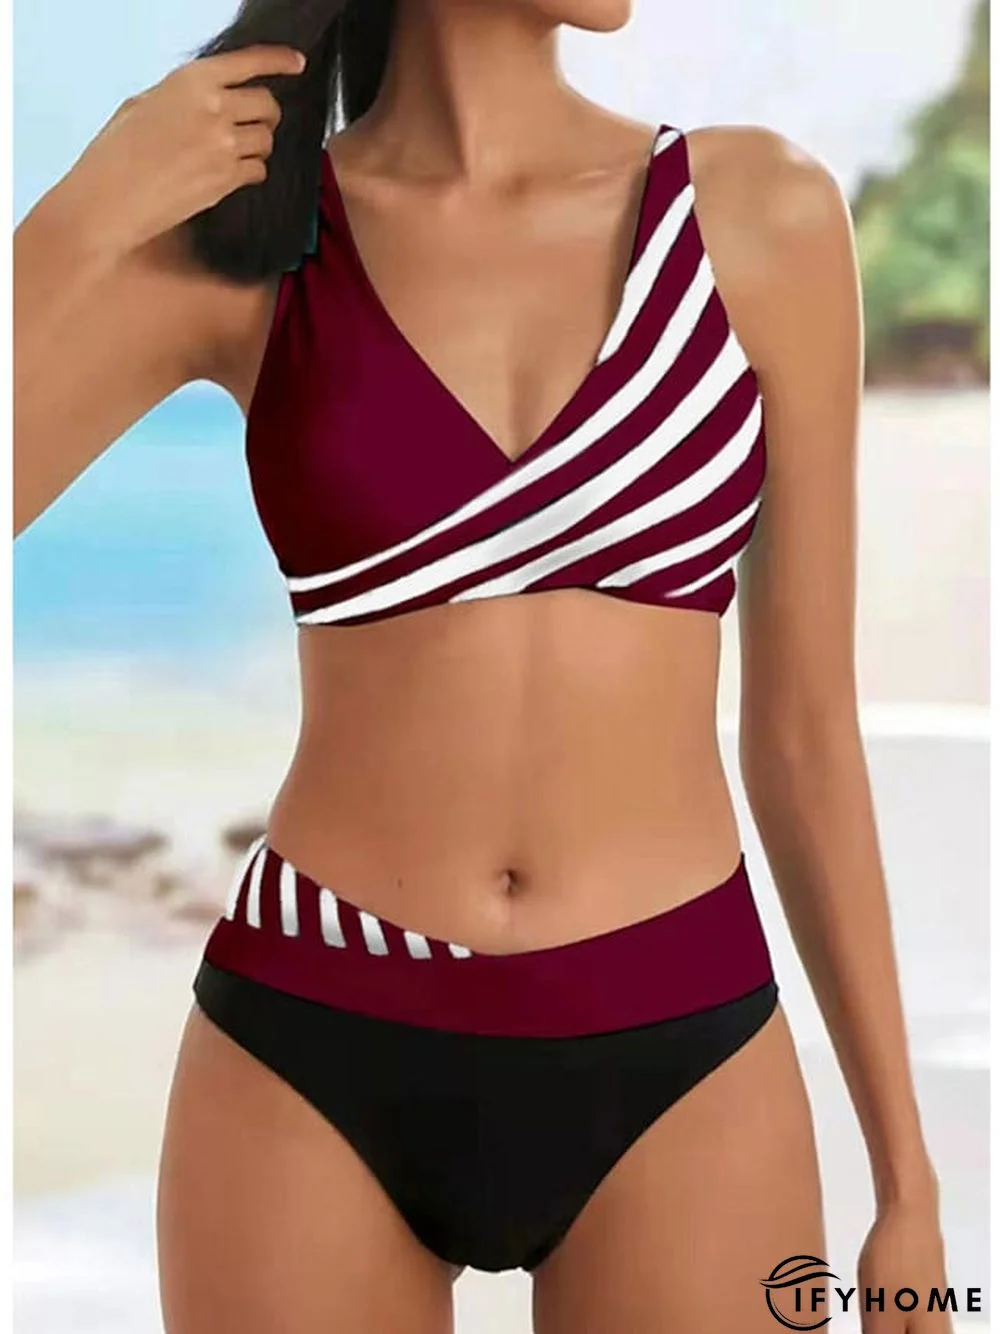 Women's Swimwear Bikini Plus Size Swimsuit 2 Piece Printing Striped Black Pink Red Blue Bathing Suits Sports Beach Wear Summer | IFYHOME